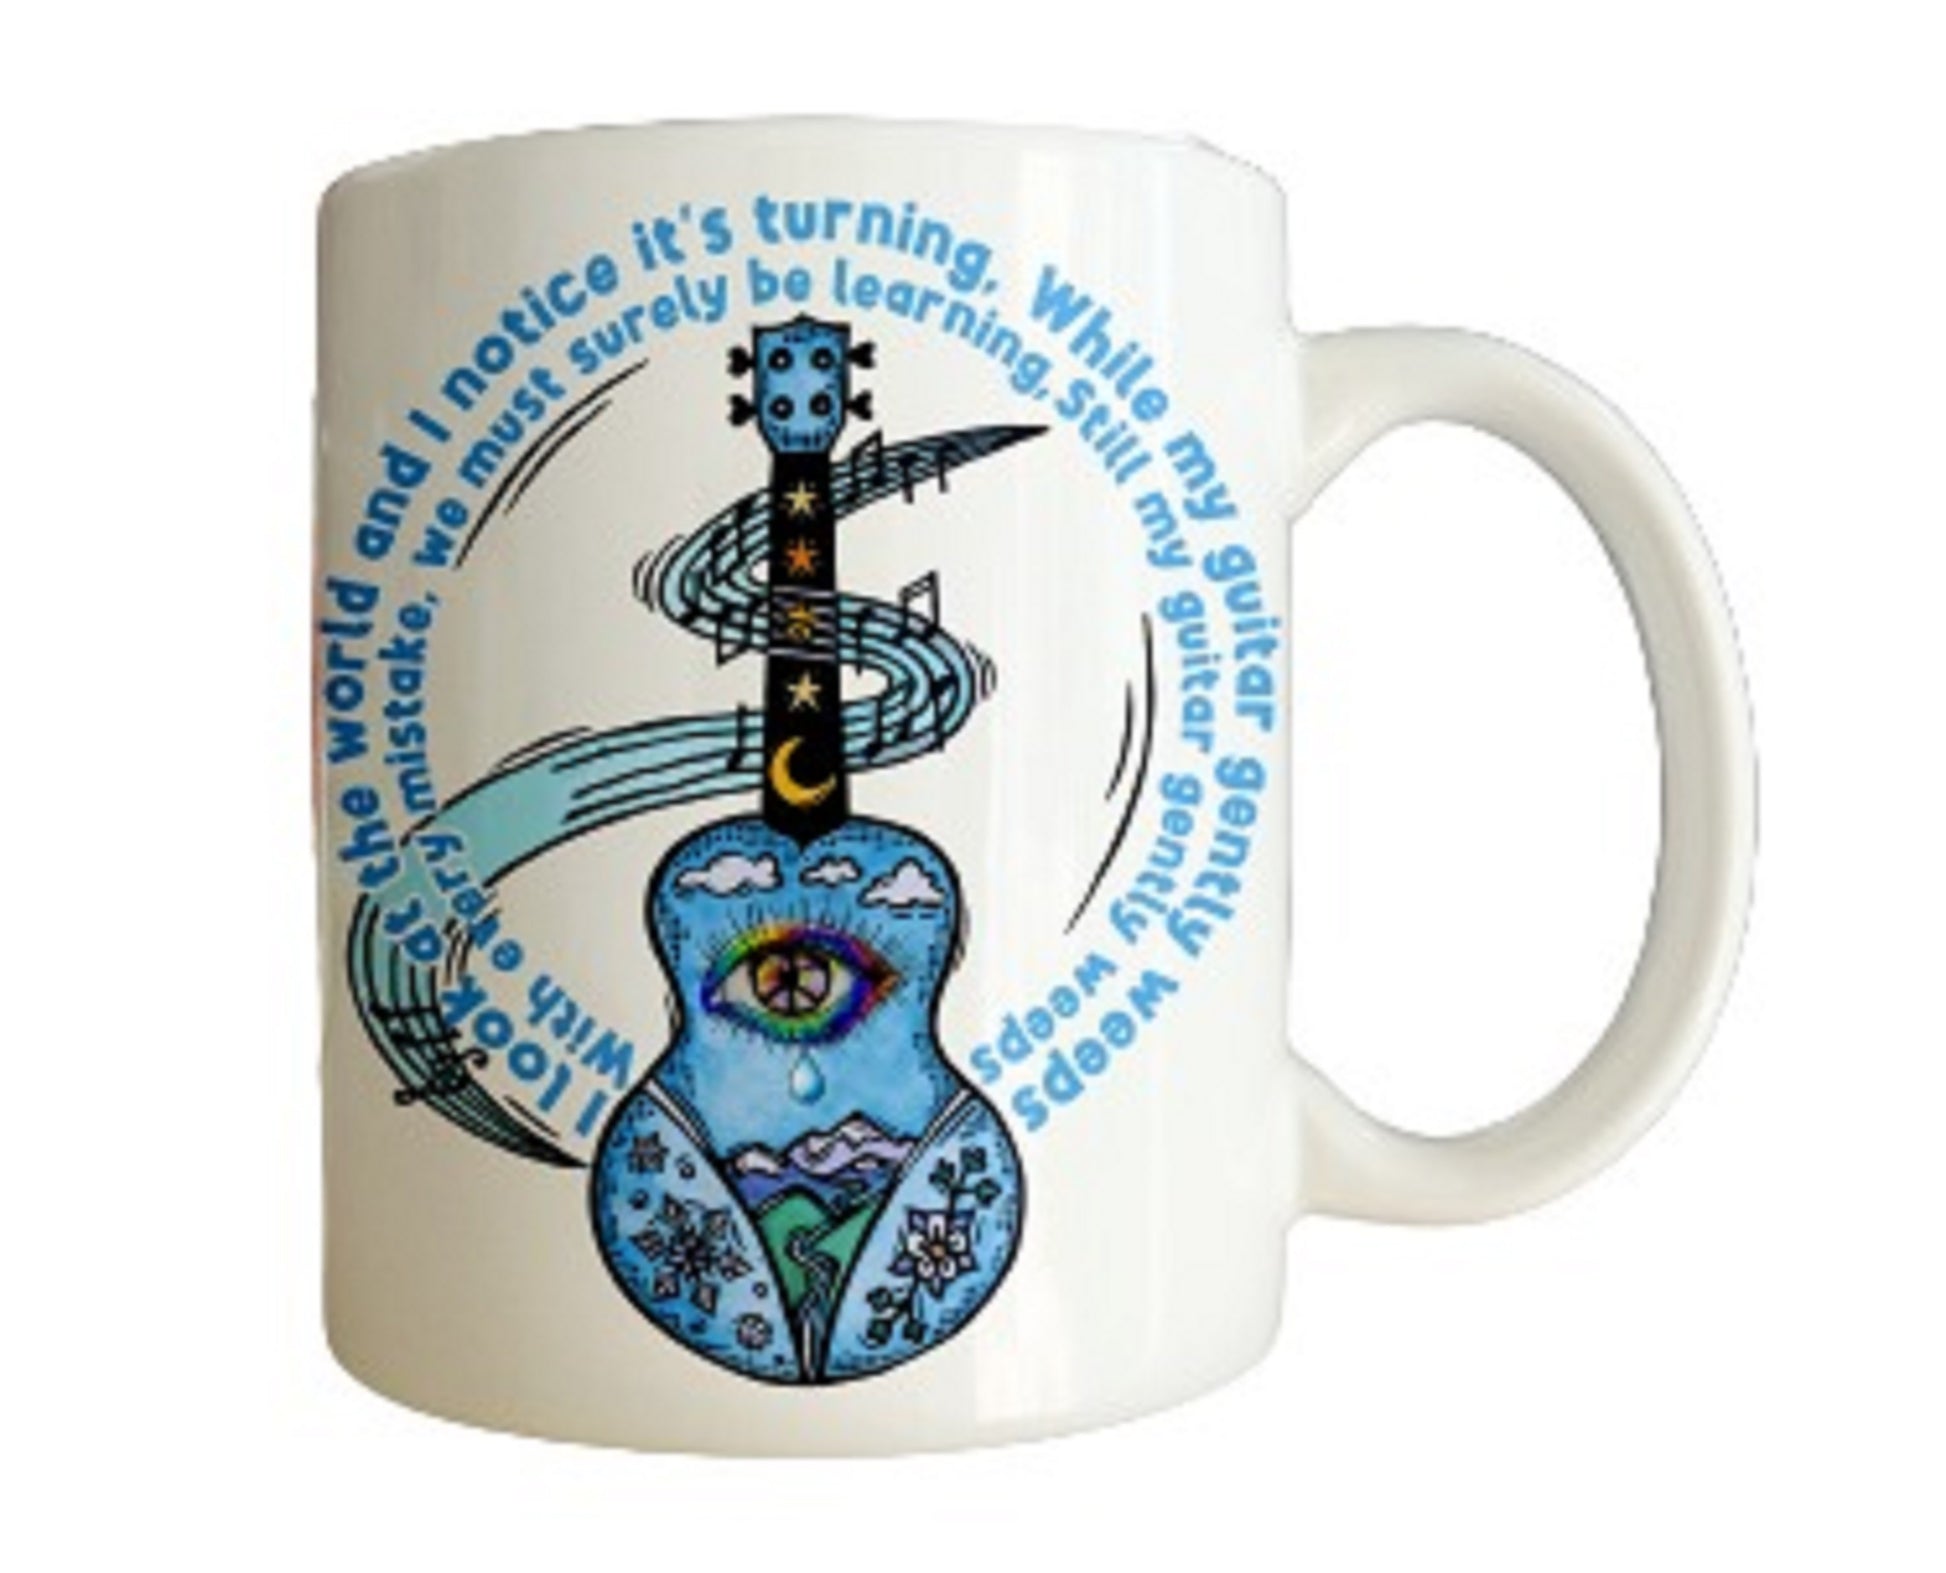  Hippy Guitar Coffee Mug by Free Spirit Accessories sold by Free Spirit Accessories